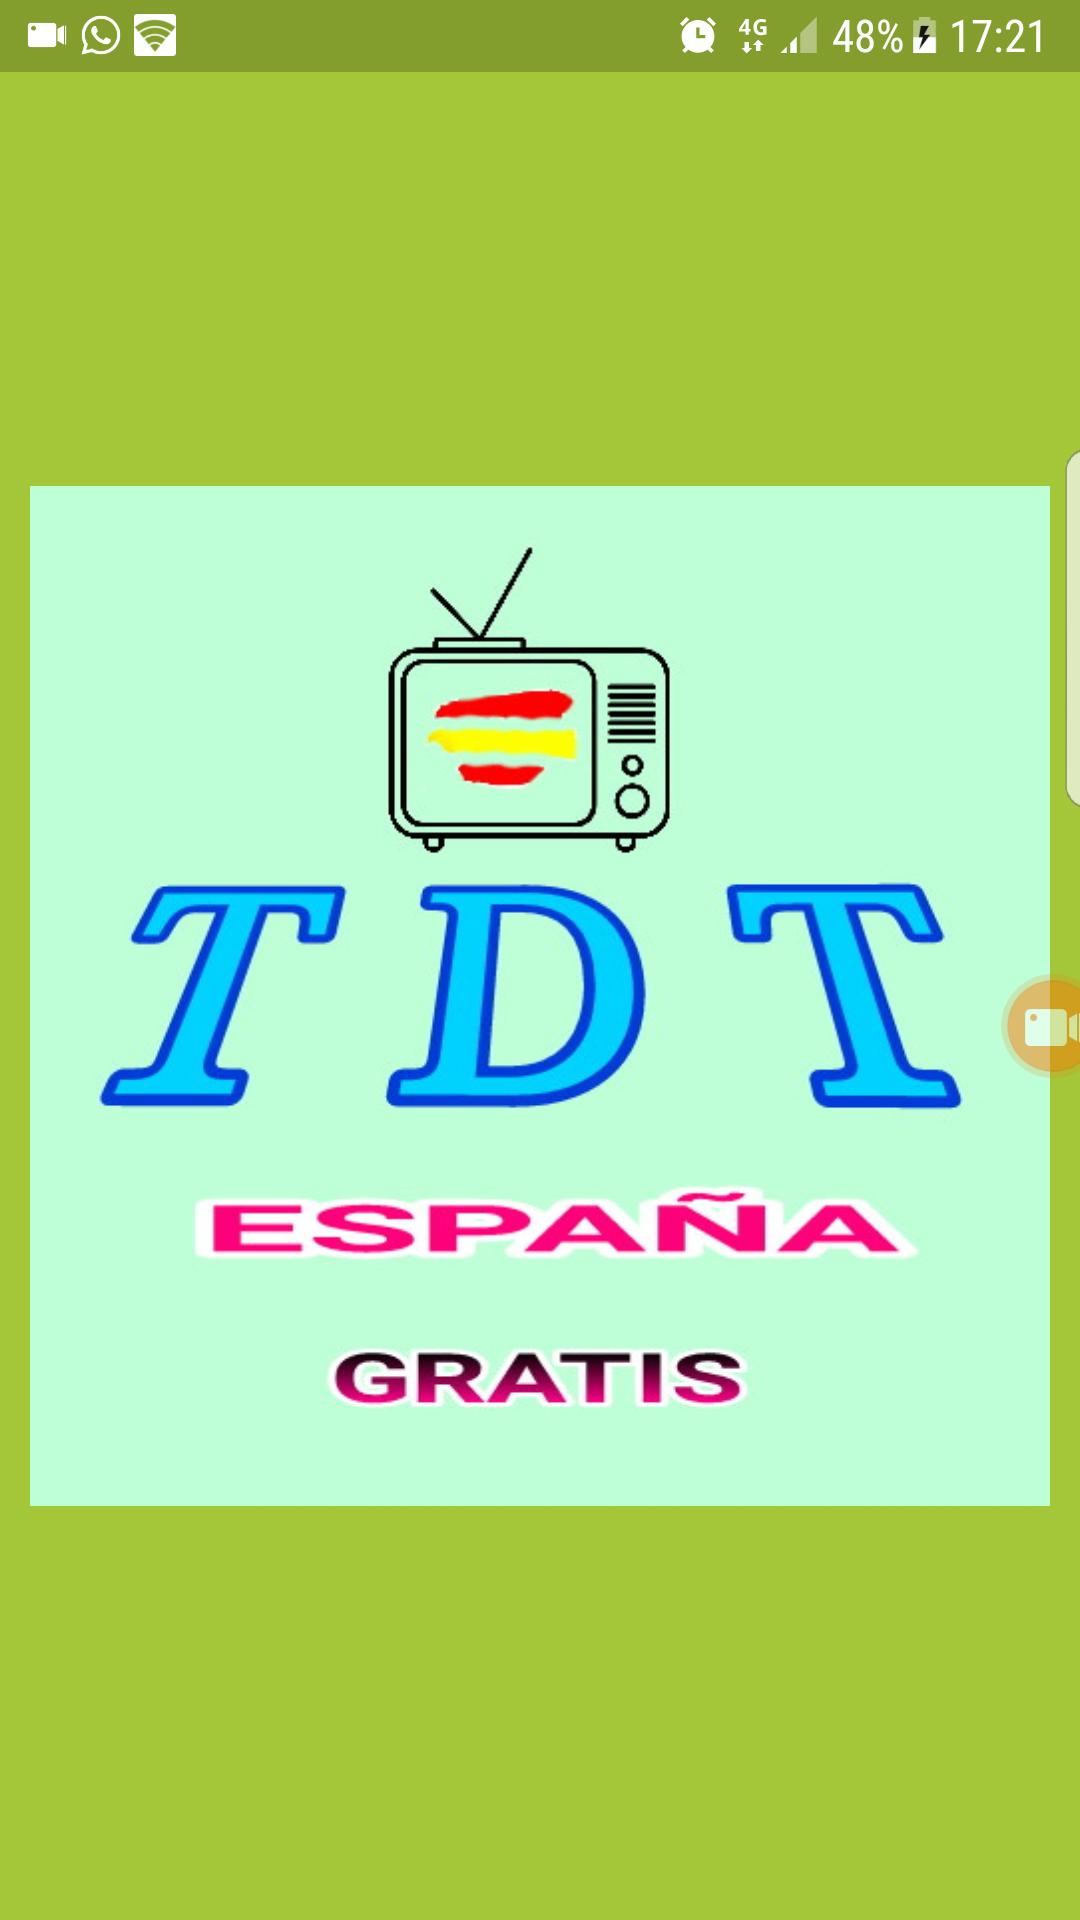 TDT ESPAÑA Online Gratis for Android - APK Download